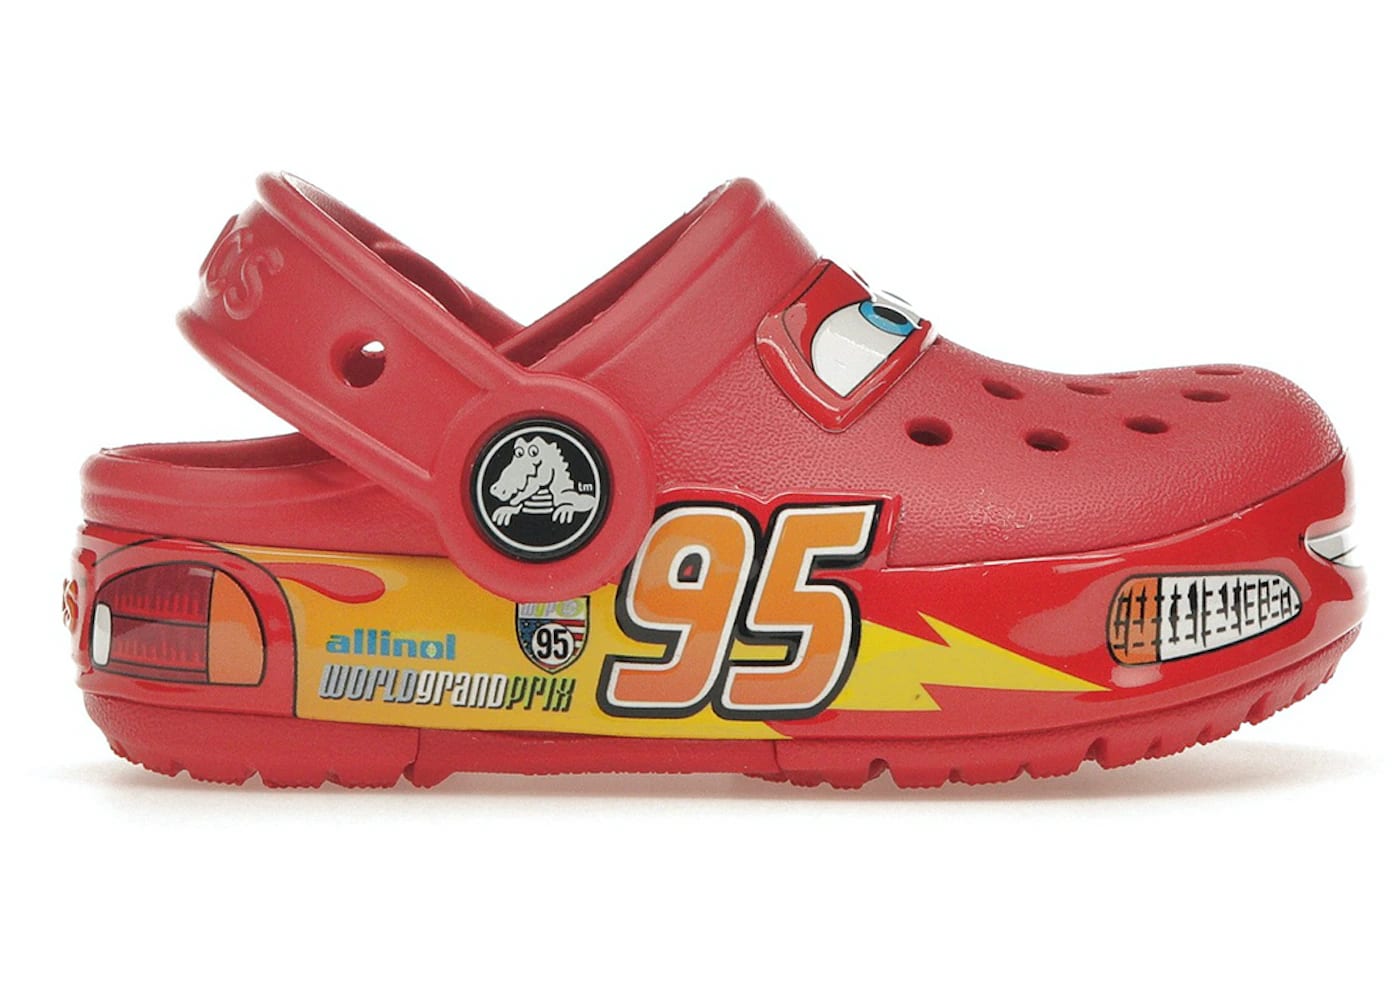 Crocs Classic Clog Lightning McQueen (TD)